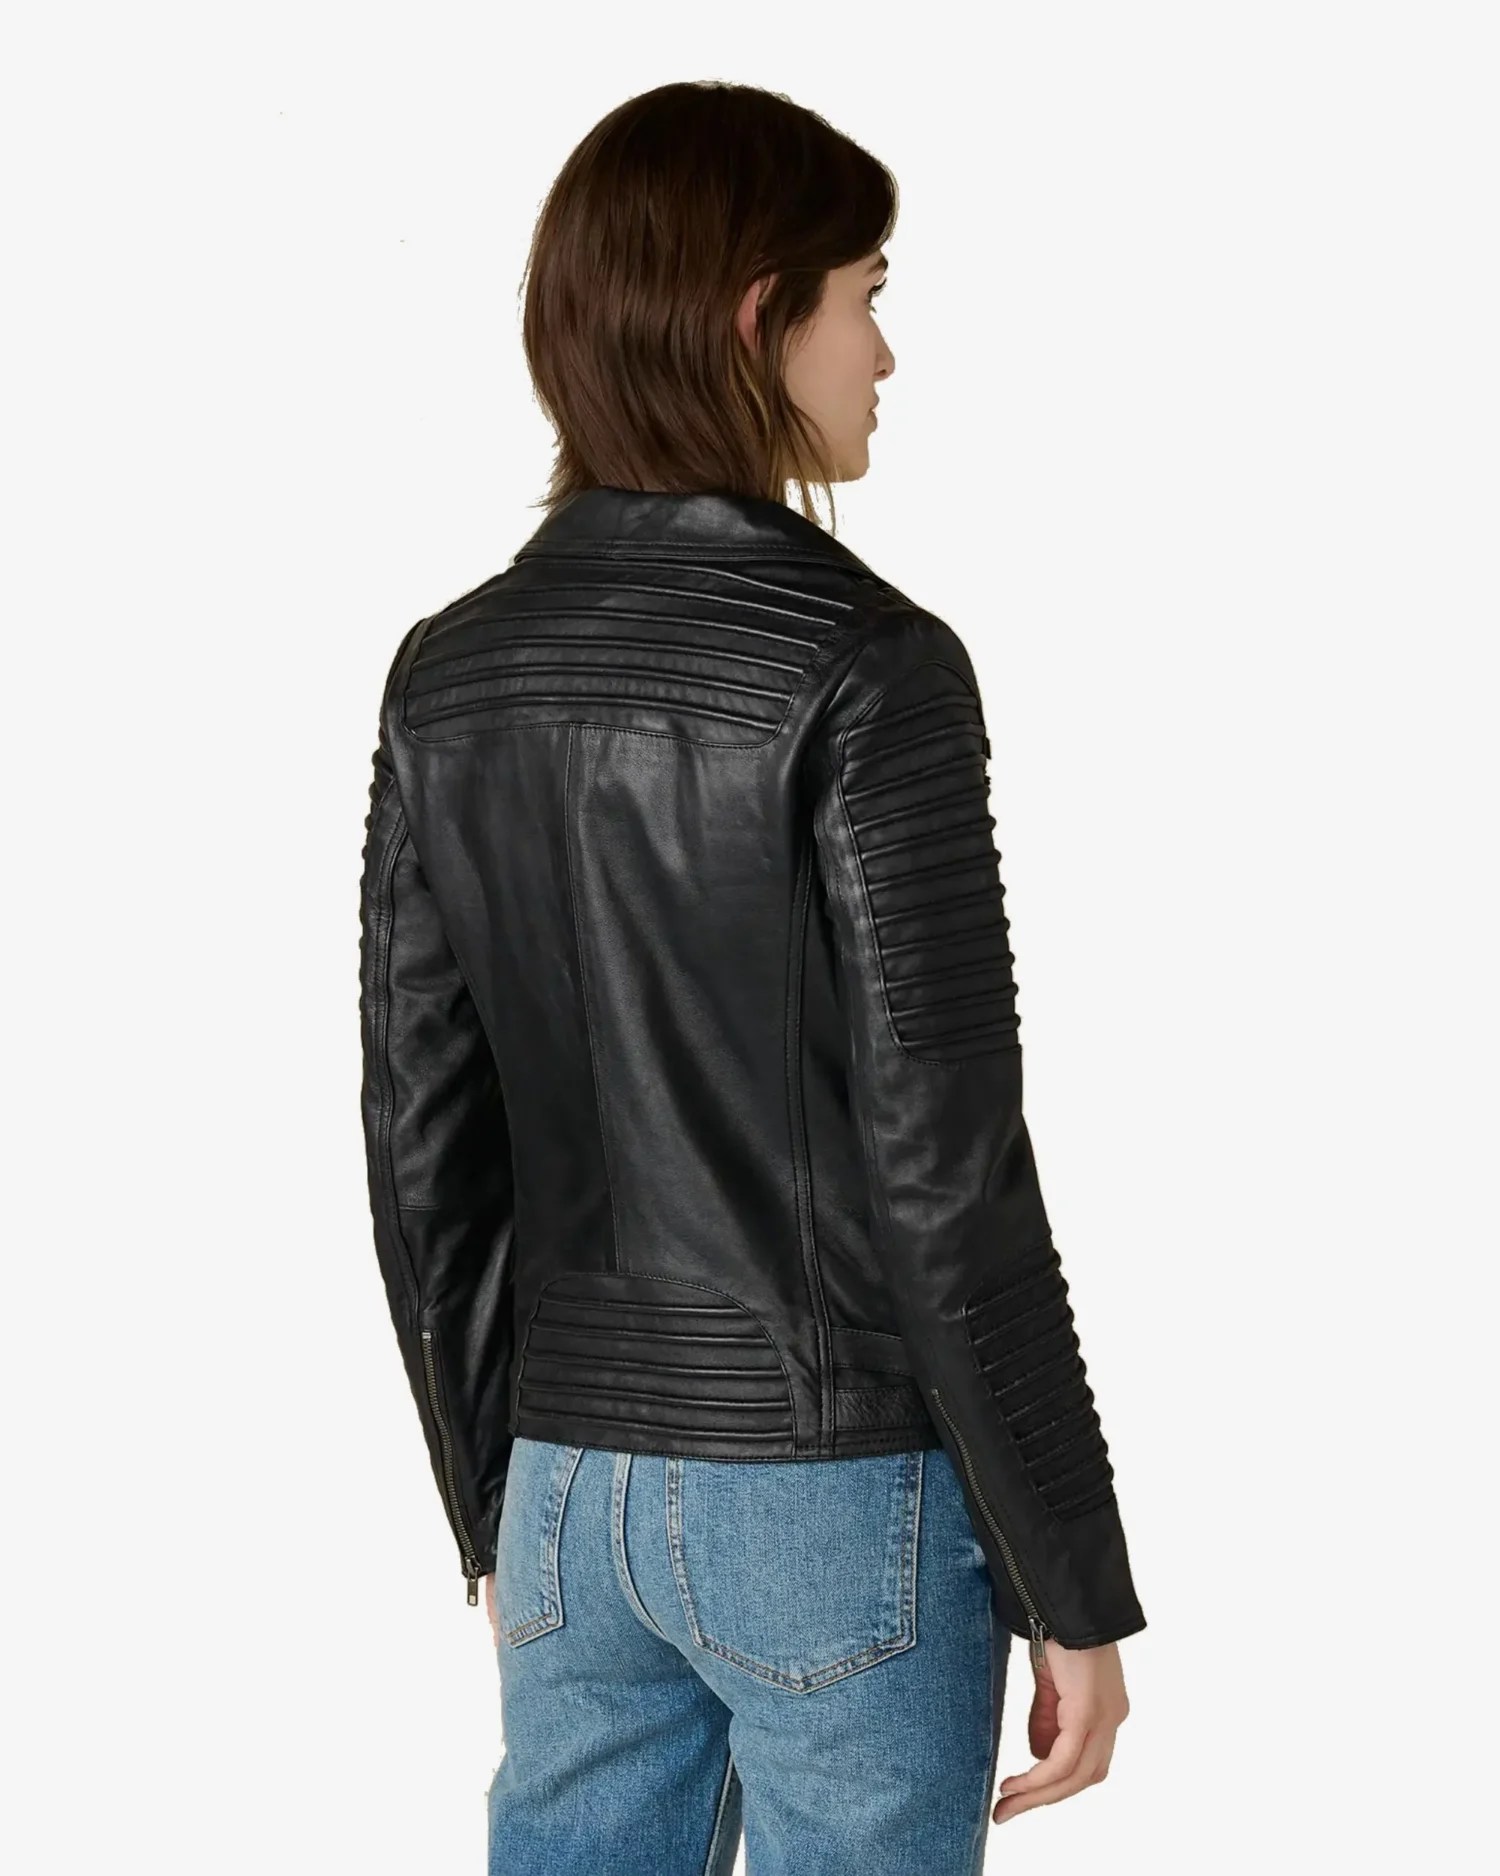 brandy-black-quilted-biker-leather-jacket-100-genuine-lambskin (4)